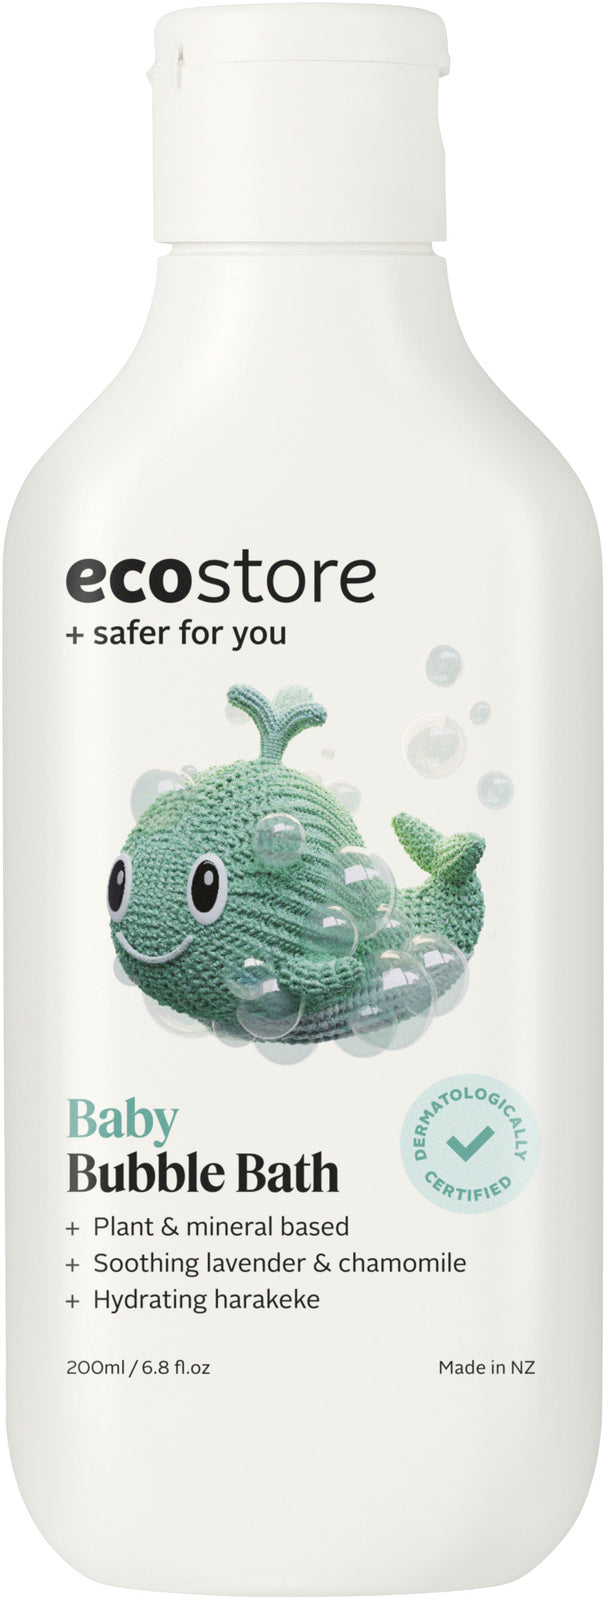 Ecostore: Baby Bubble Bath - 200ml